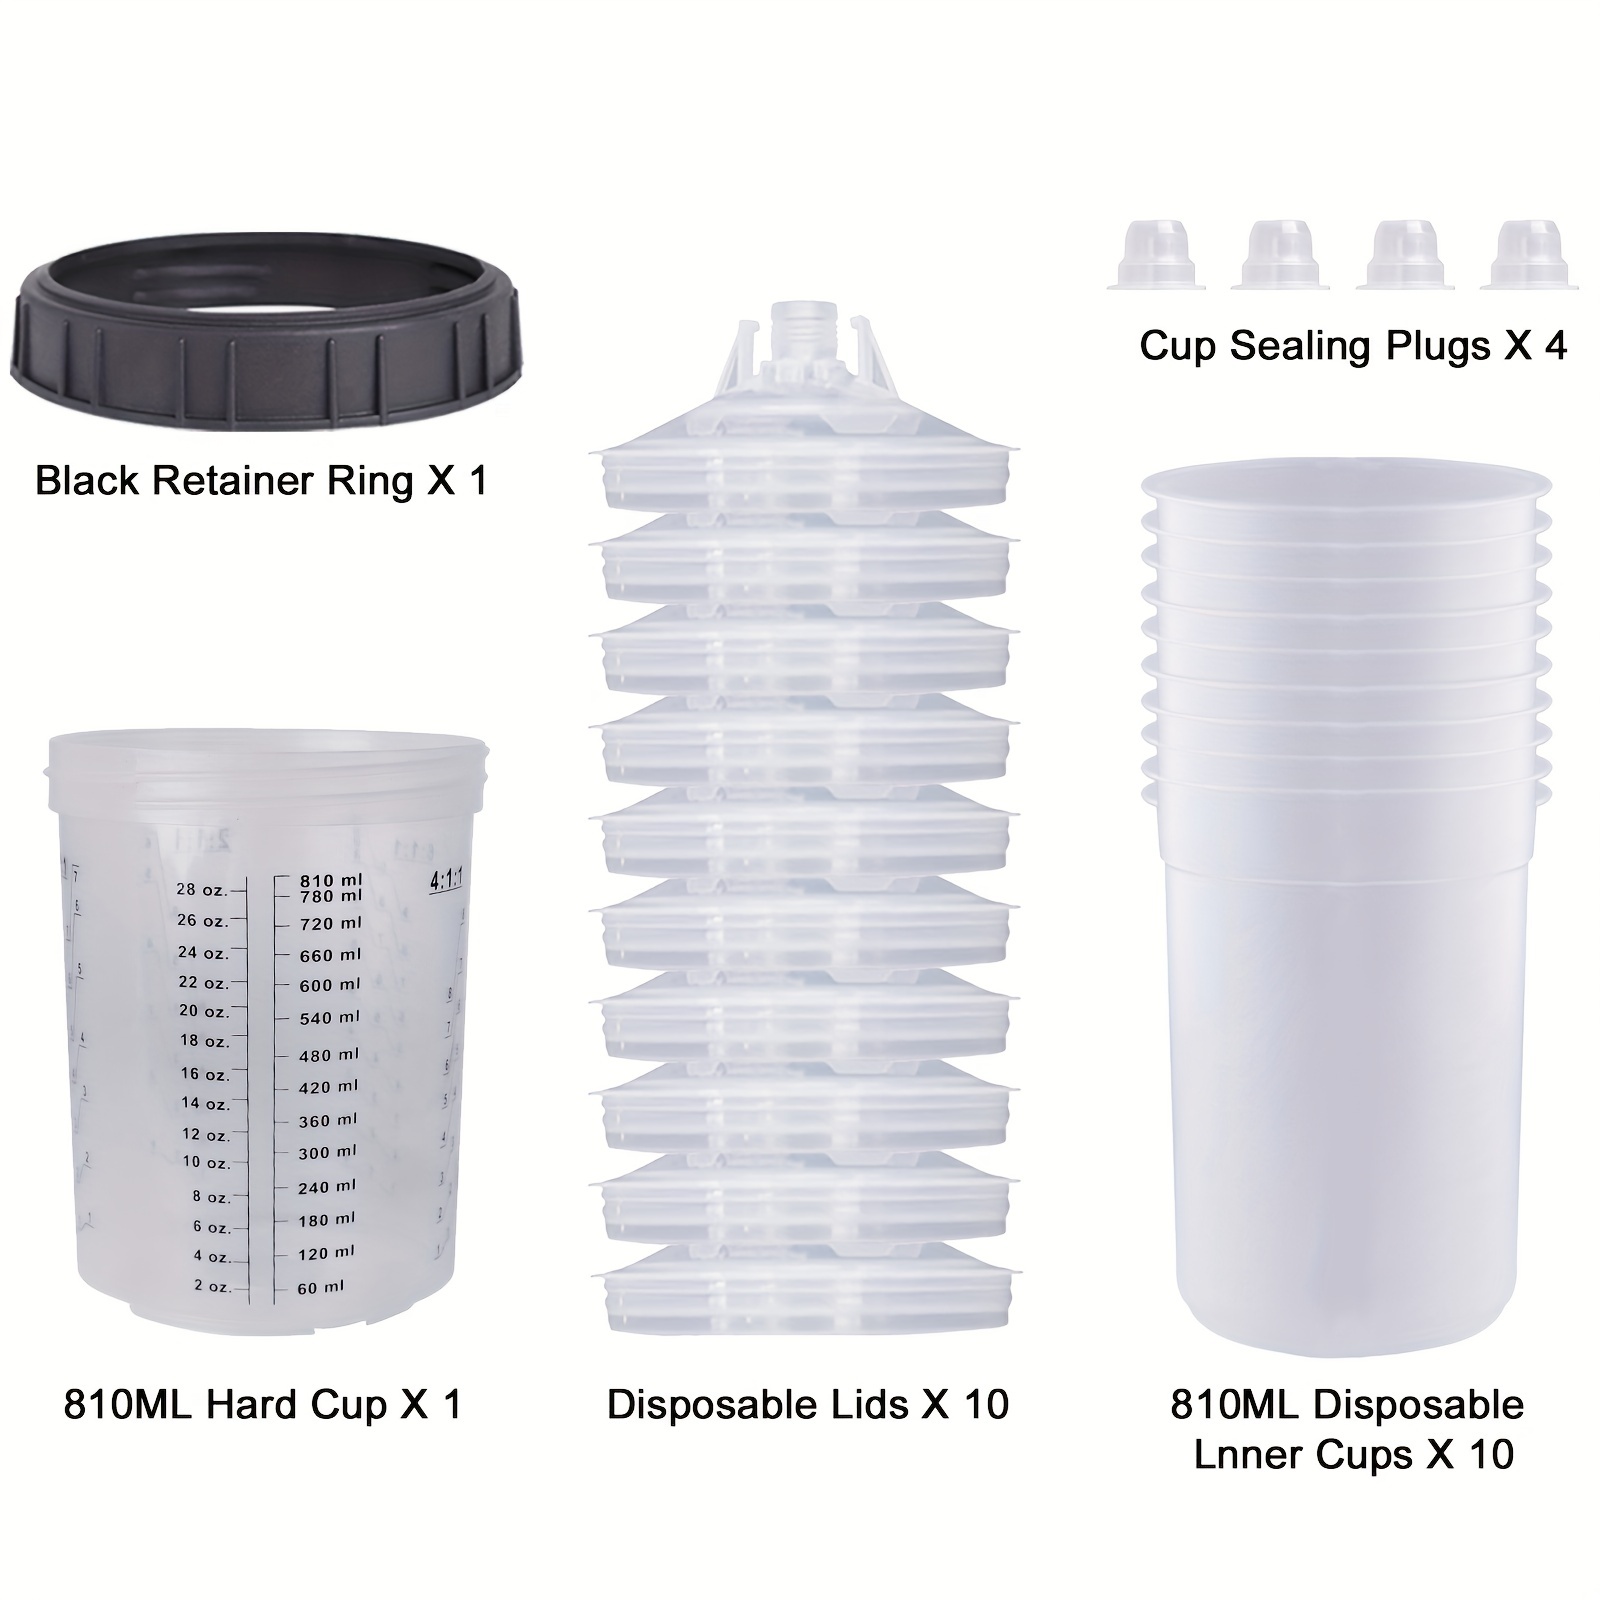 Disposable Spray Gun Cup, Disposable Paint Cup, Paint Spray Gun Cup